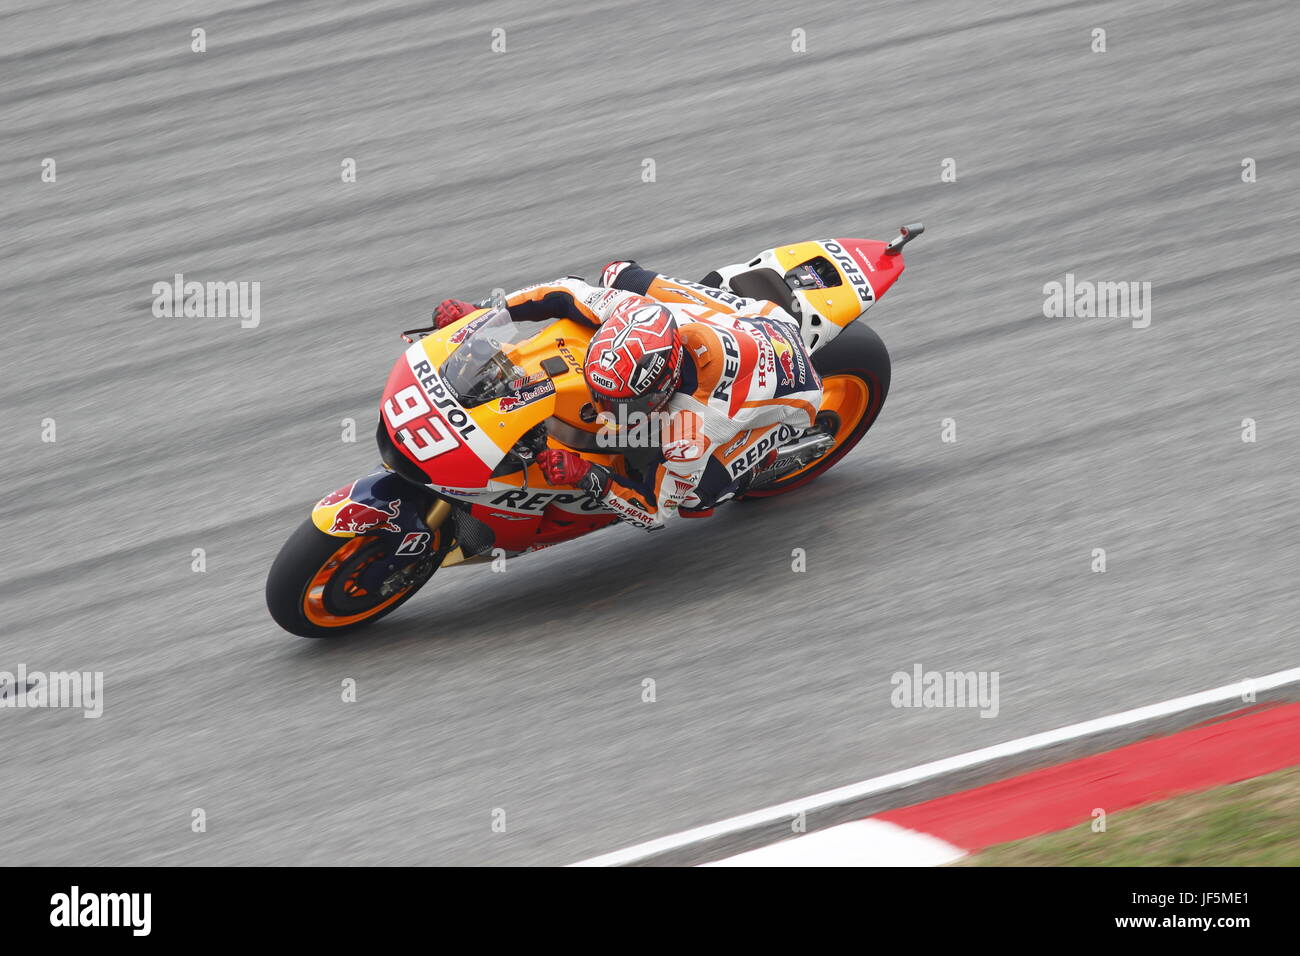 MotoGP 2015 motor sports bike racing driver Marc Marquez Stock Photo